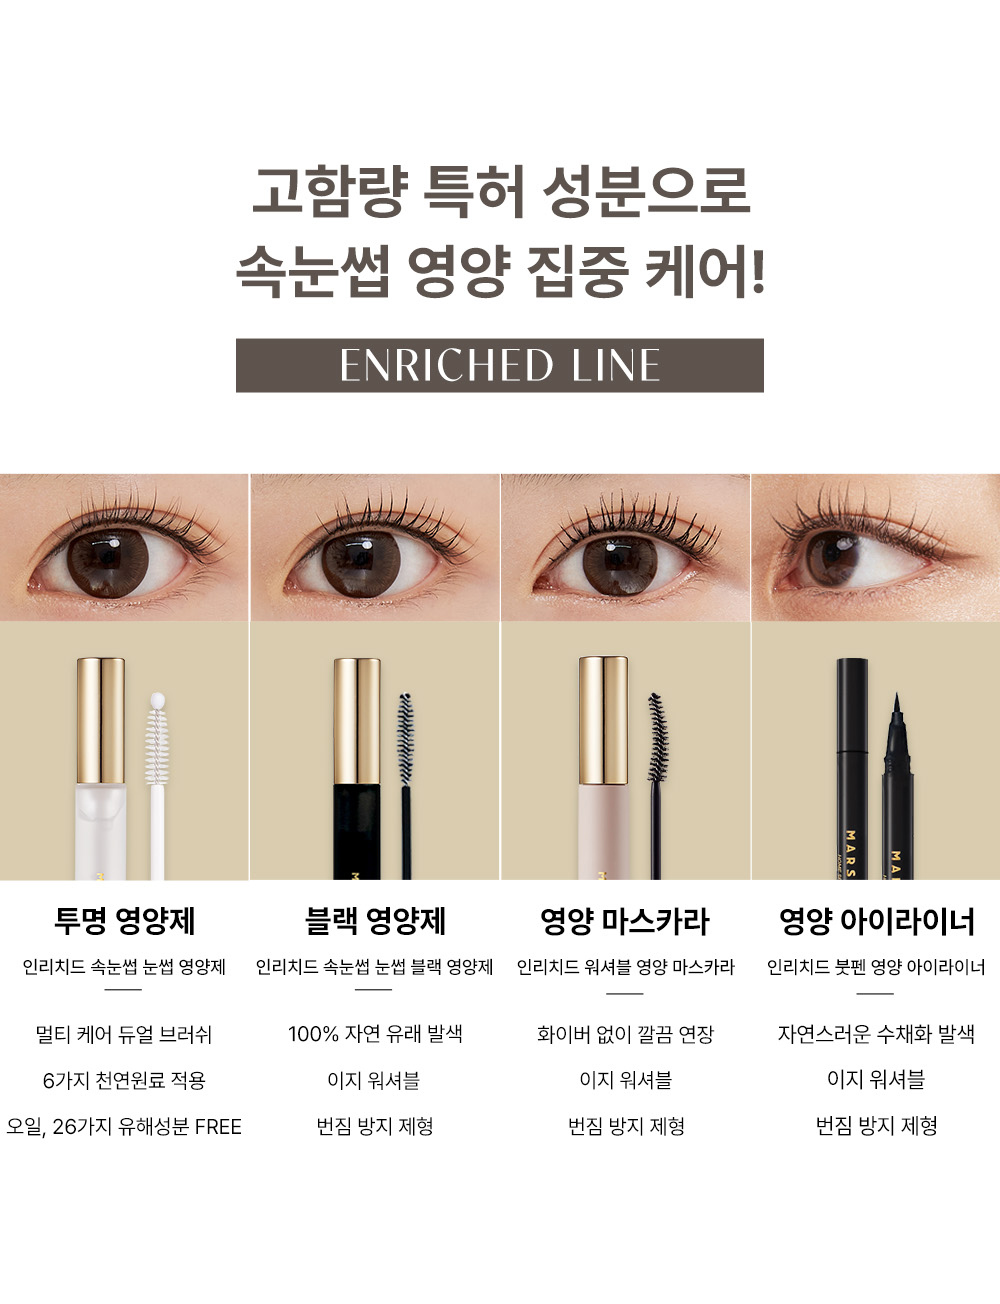 cosmetics product image-S157L8